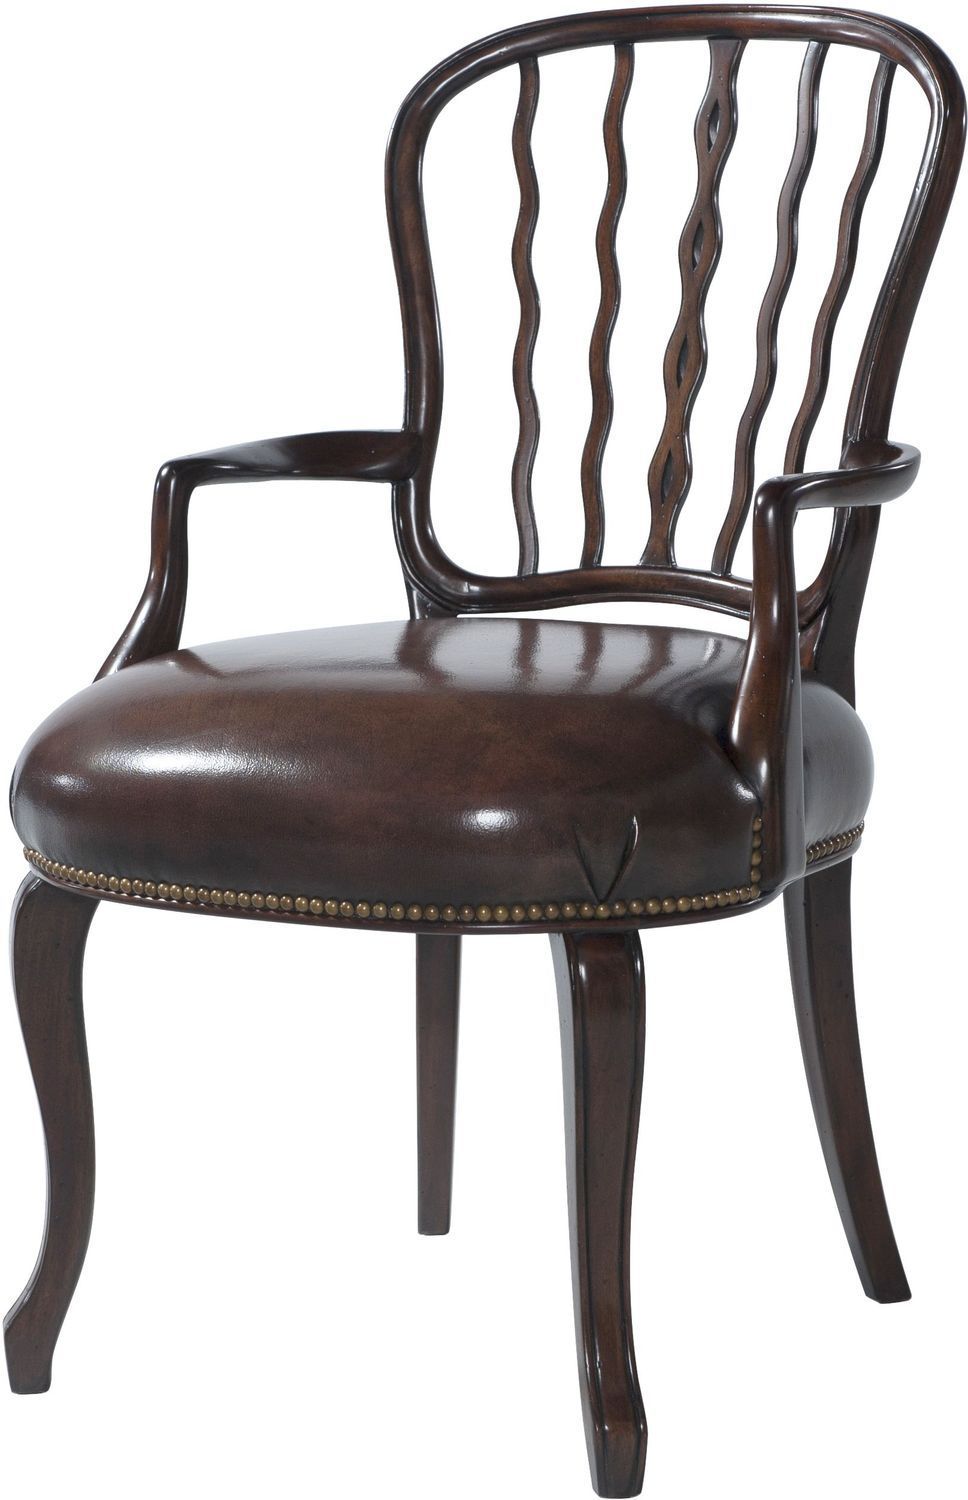 Ghế Althorp Seddon Arm Chair